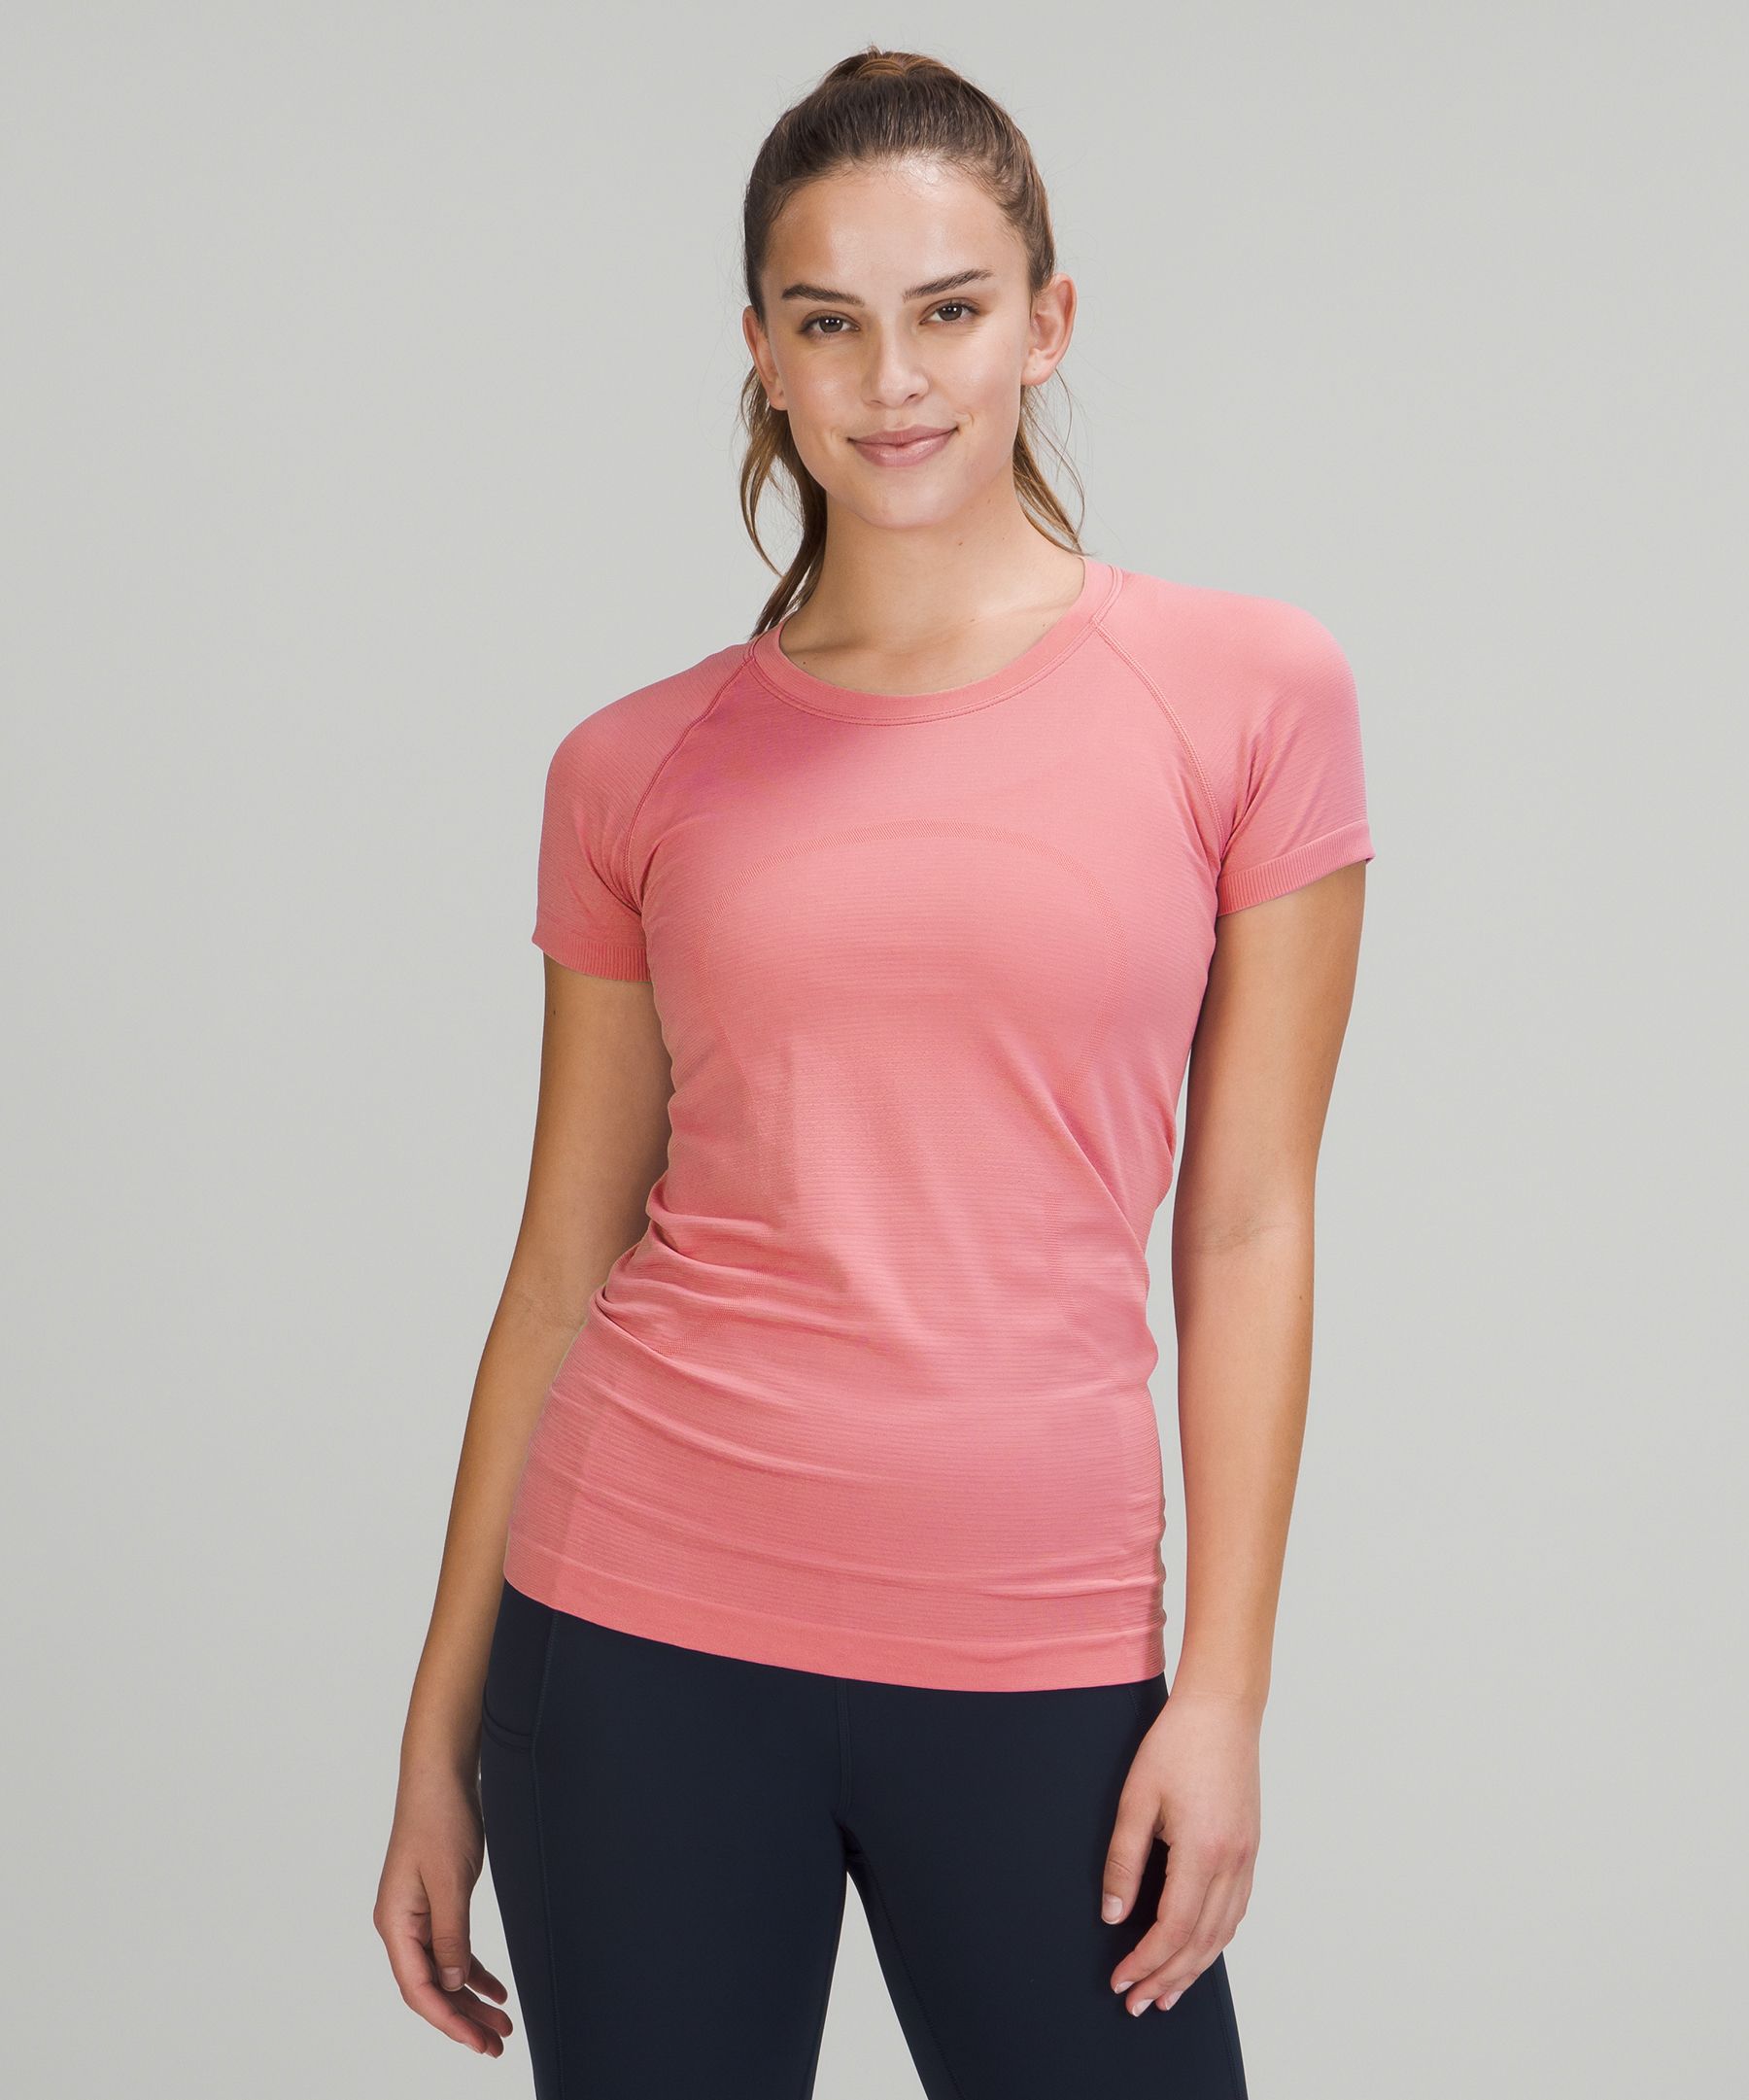 Lululemon Swiftly Tech Short Sleeve Shirt 2.0 In Pink Blossom/pink Blossom